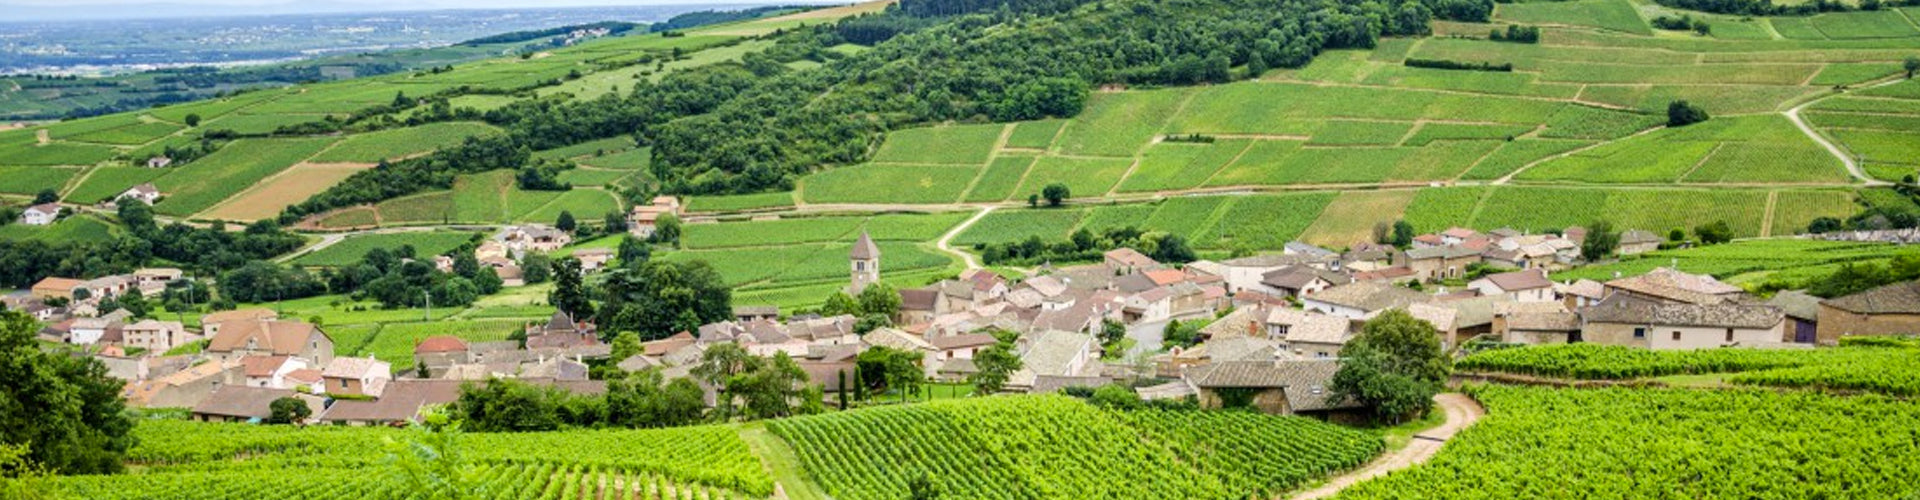 Vineyards in the Mâconnais Region of Burgundy